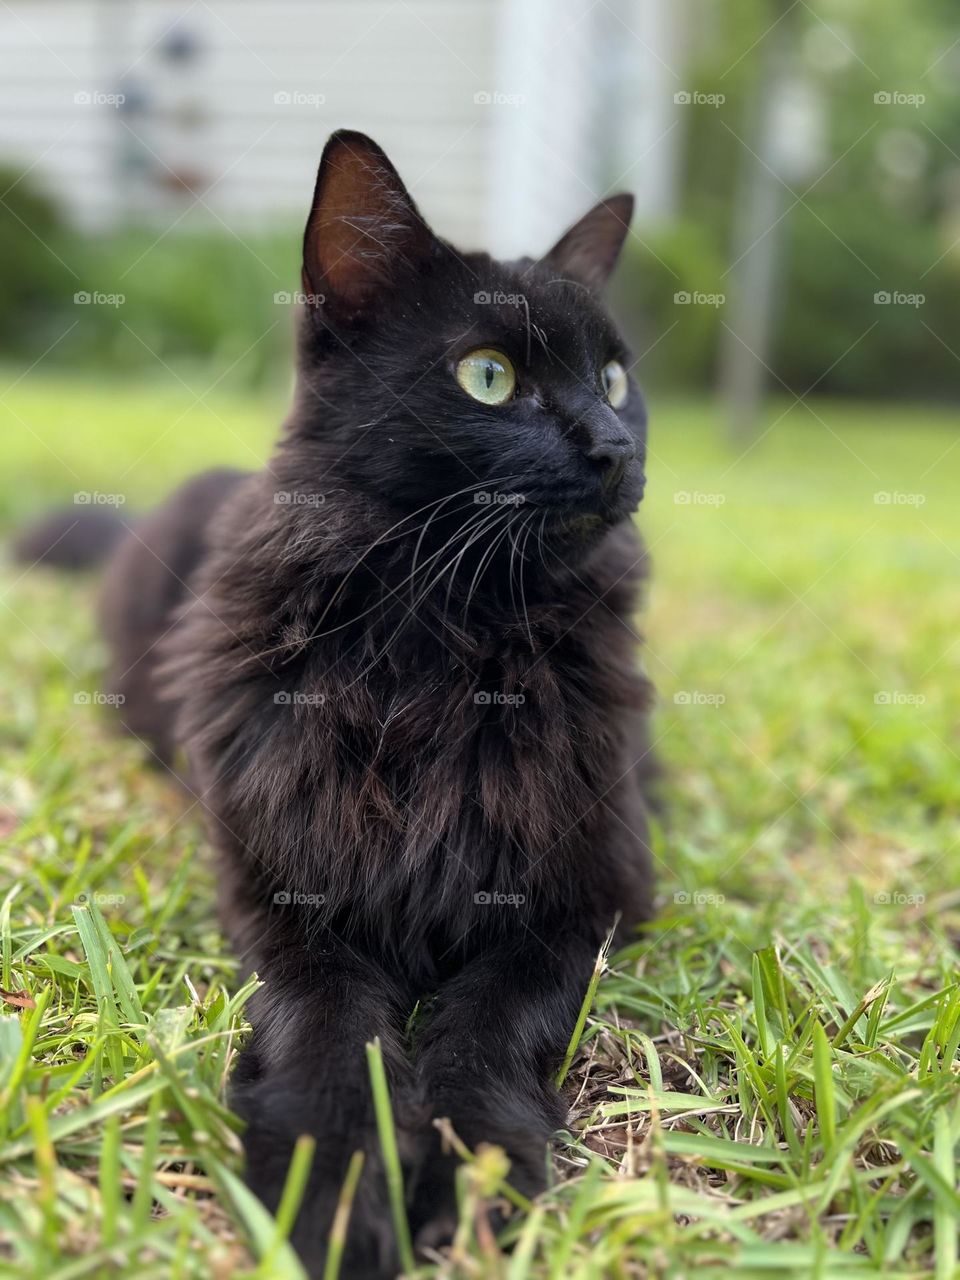 Black cat in the grass 